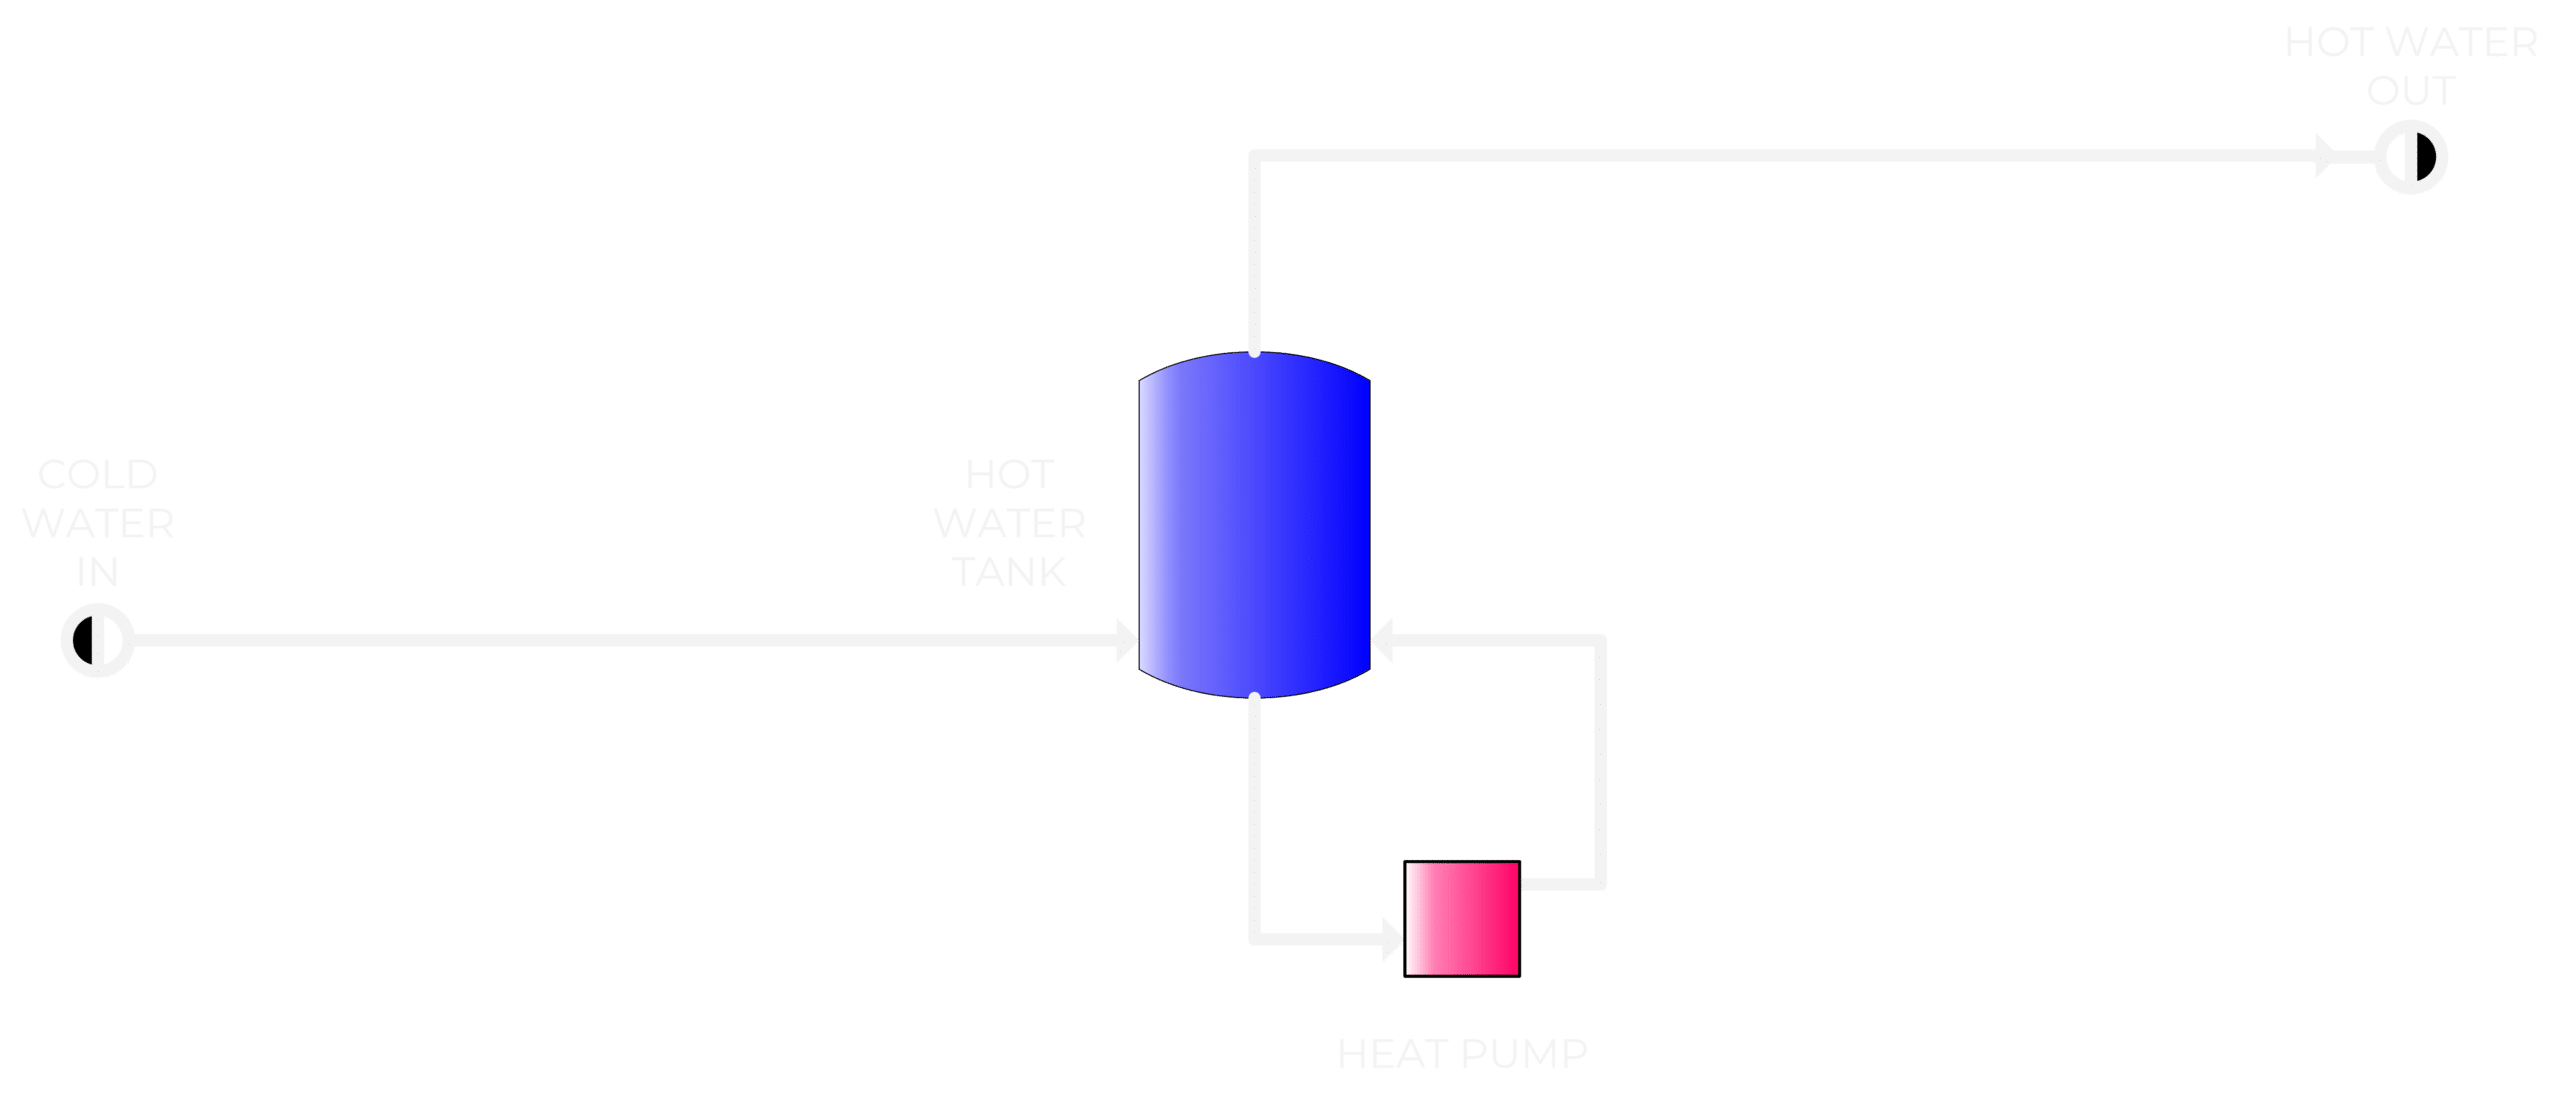 Tank with Heat Pump